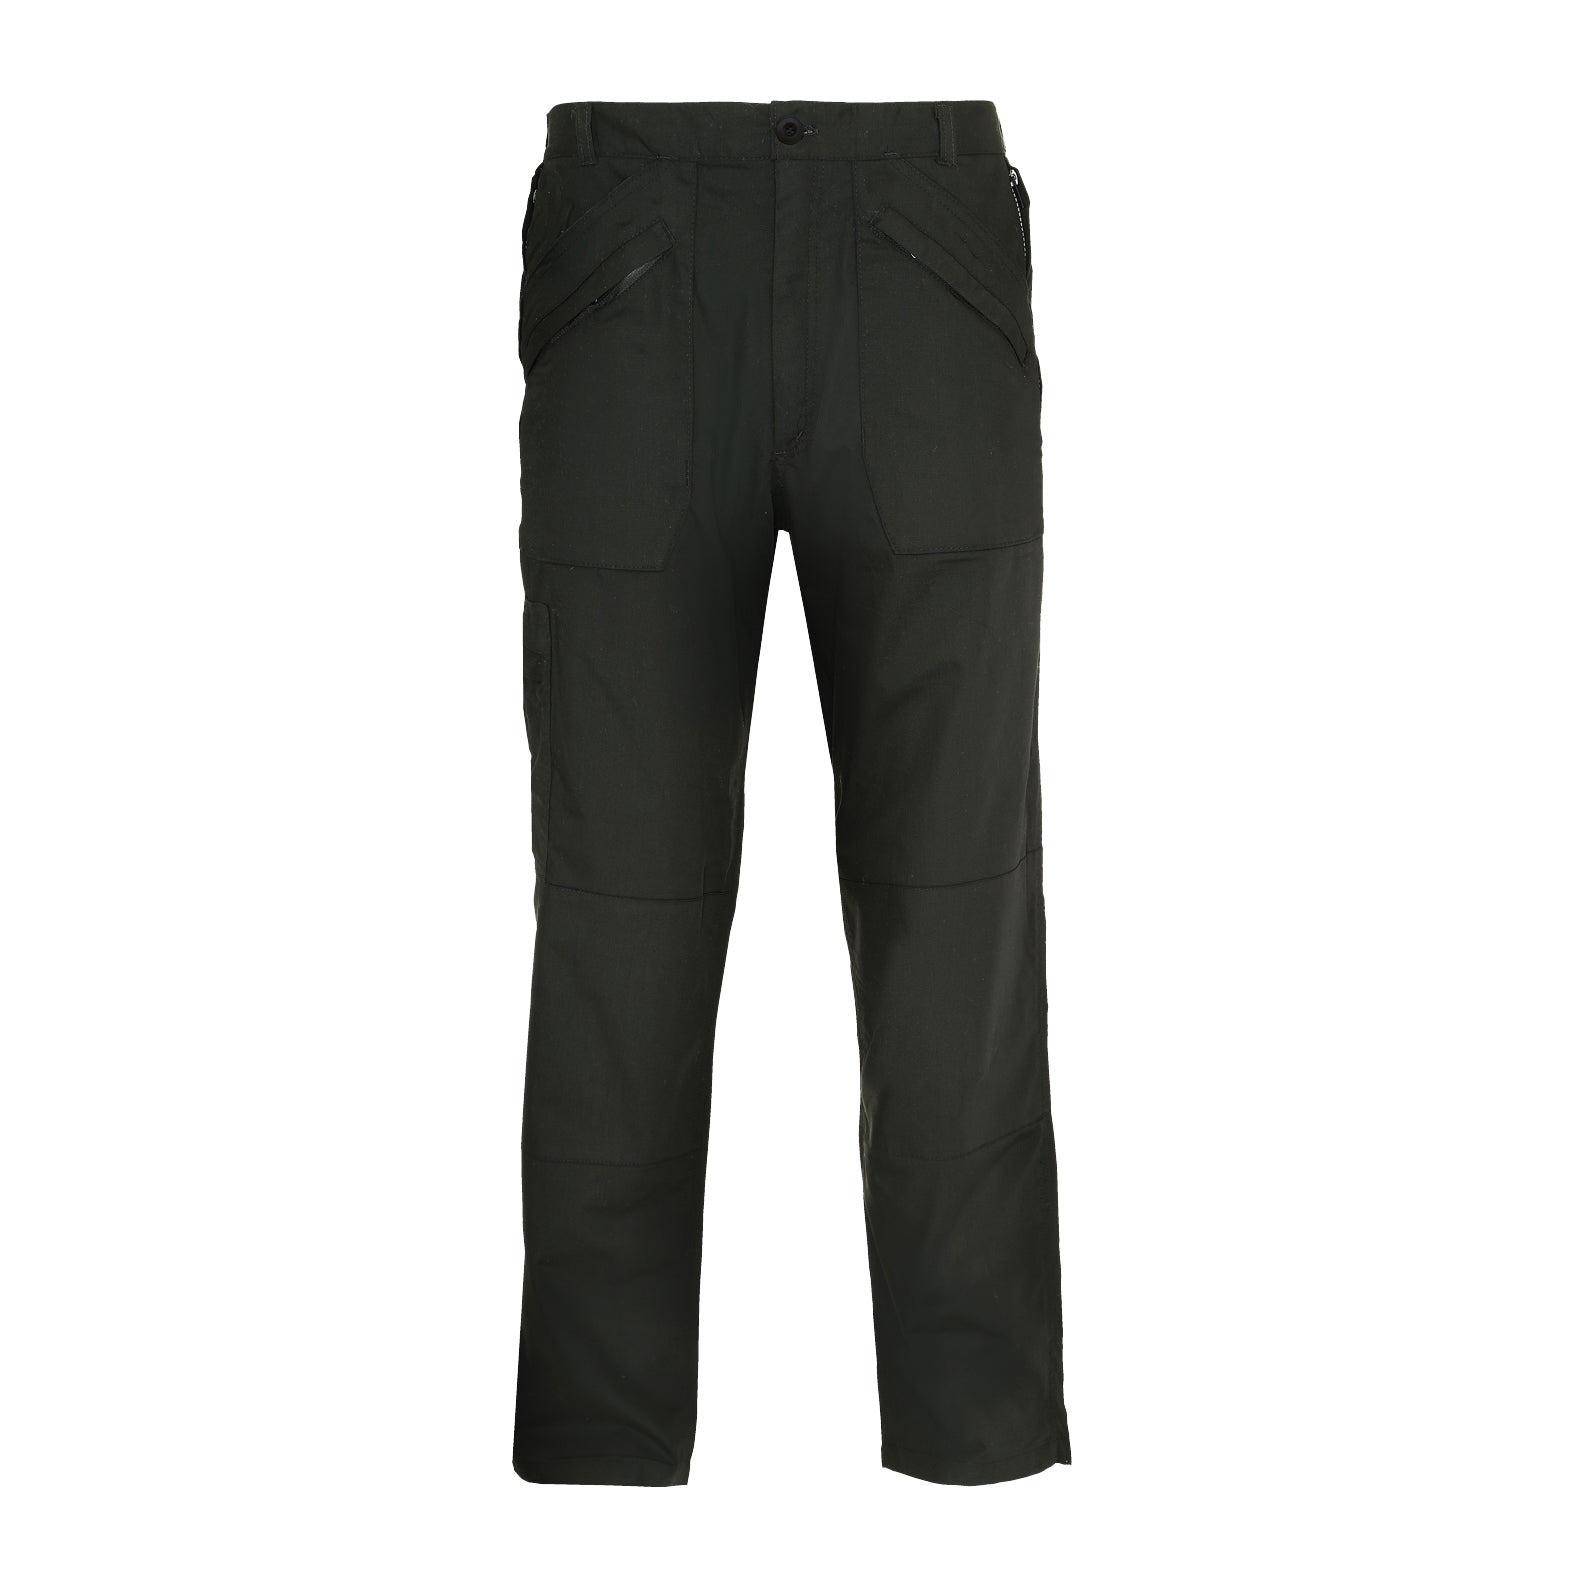 Buy Shower Resistant Duratrek Walking Trousers from the Next UK online shop